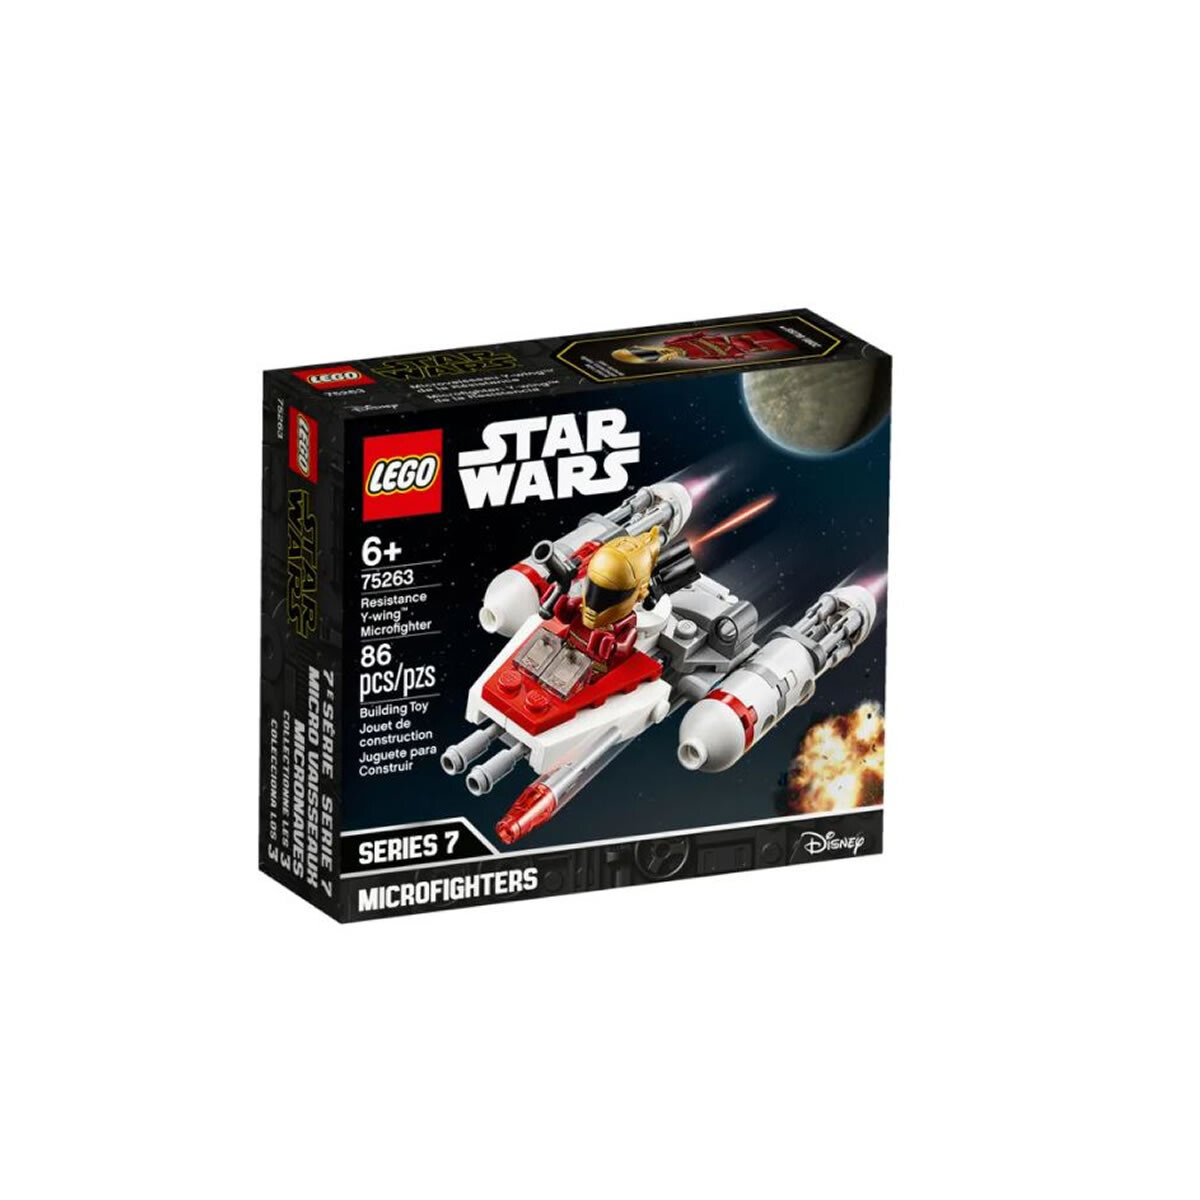 LEGO STAR WARS Resistance Y-wing 75263 